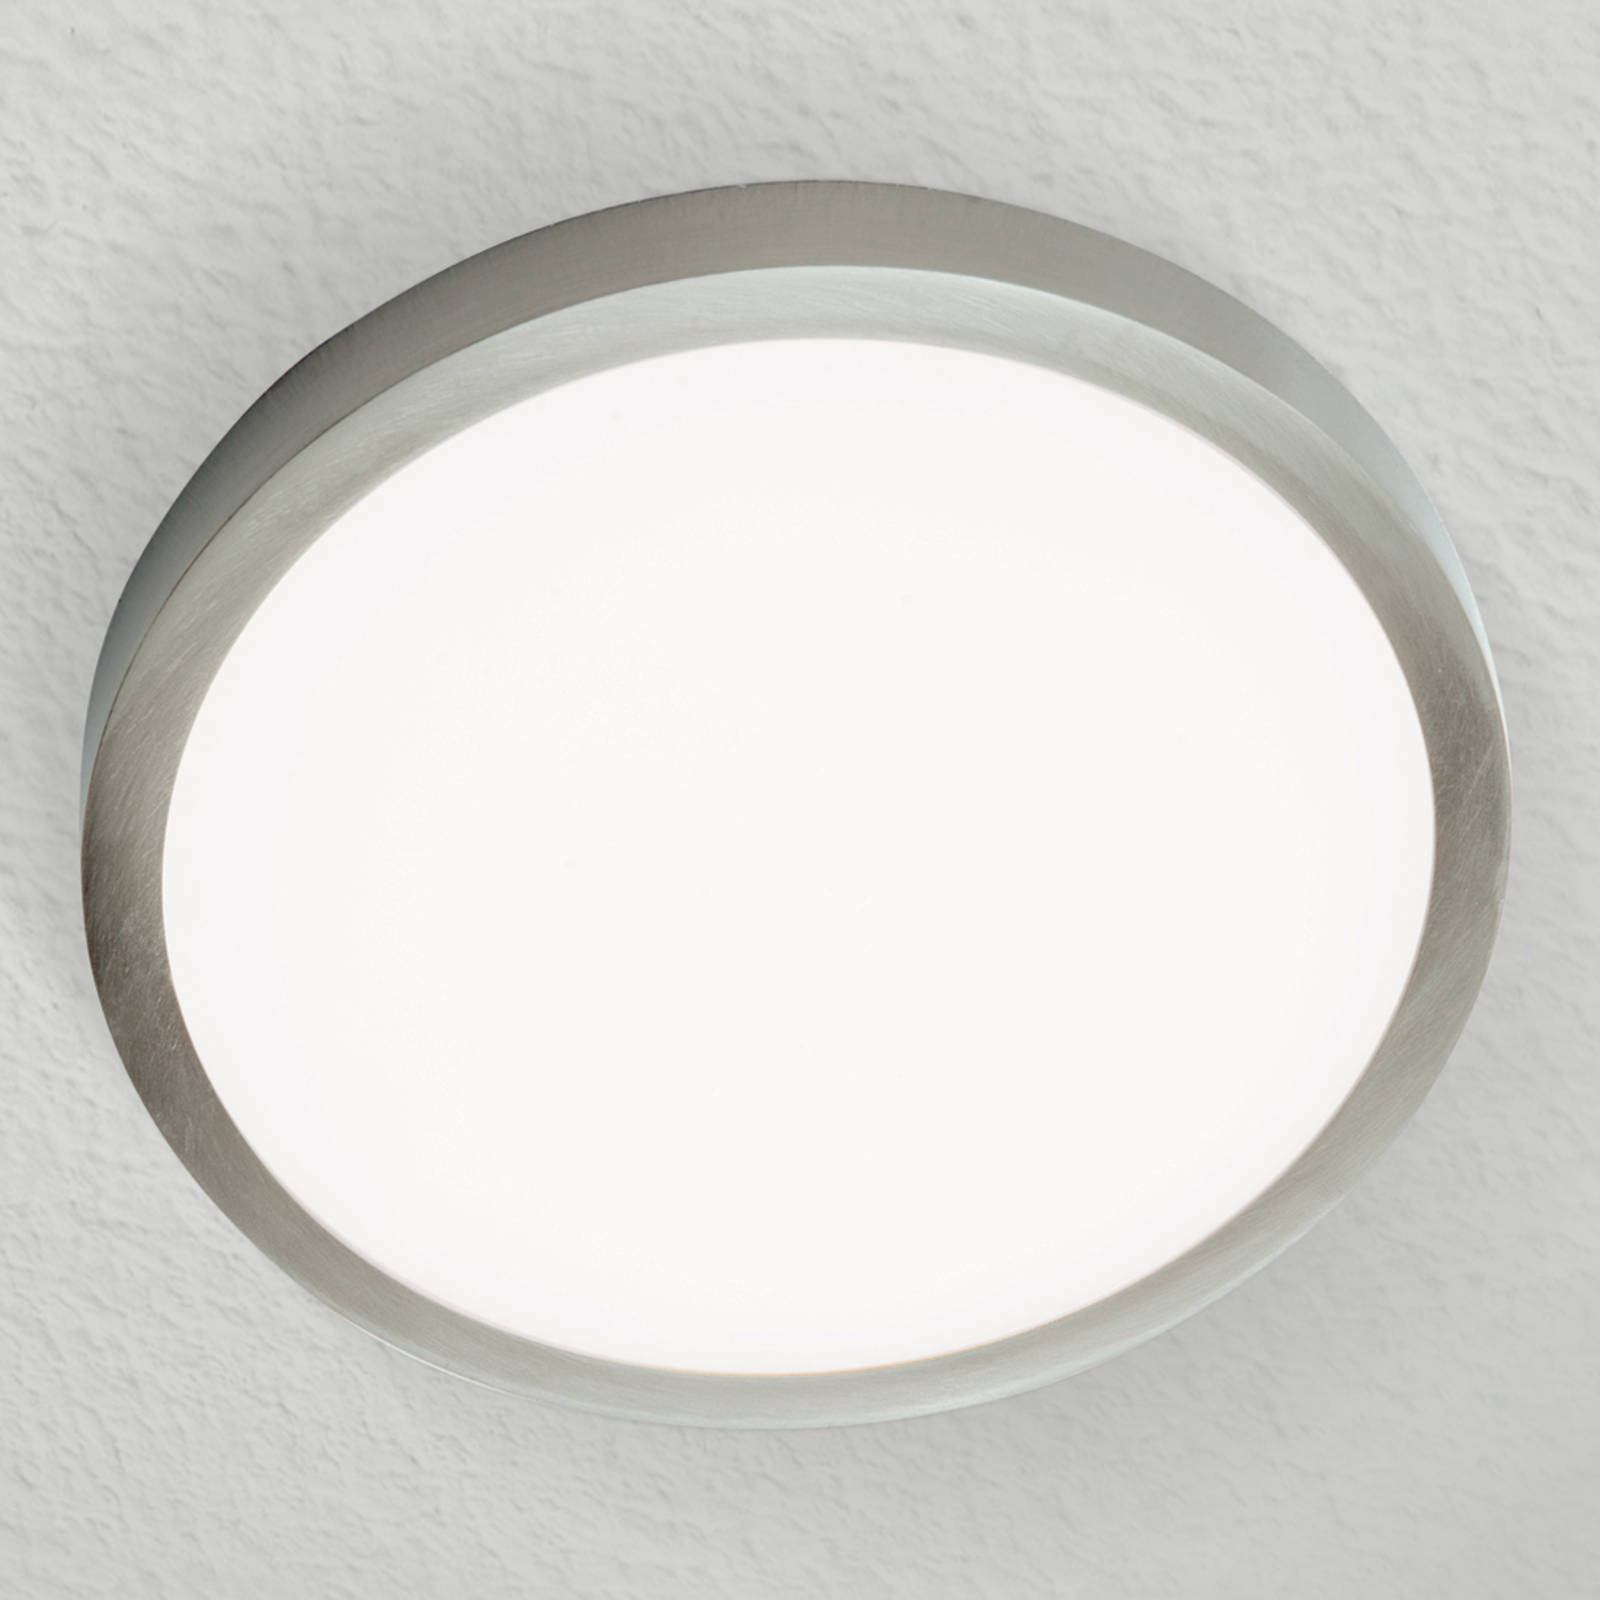 Lampa sufitowa LED Vika, okrągła, tytan, Ø 23cm